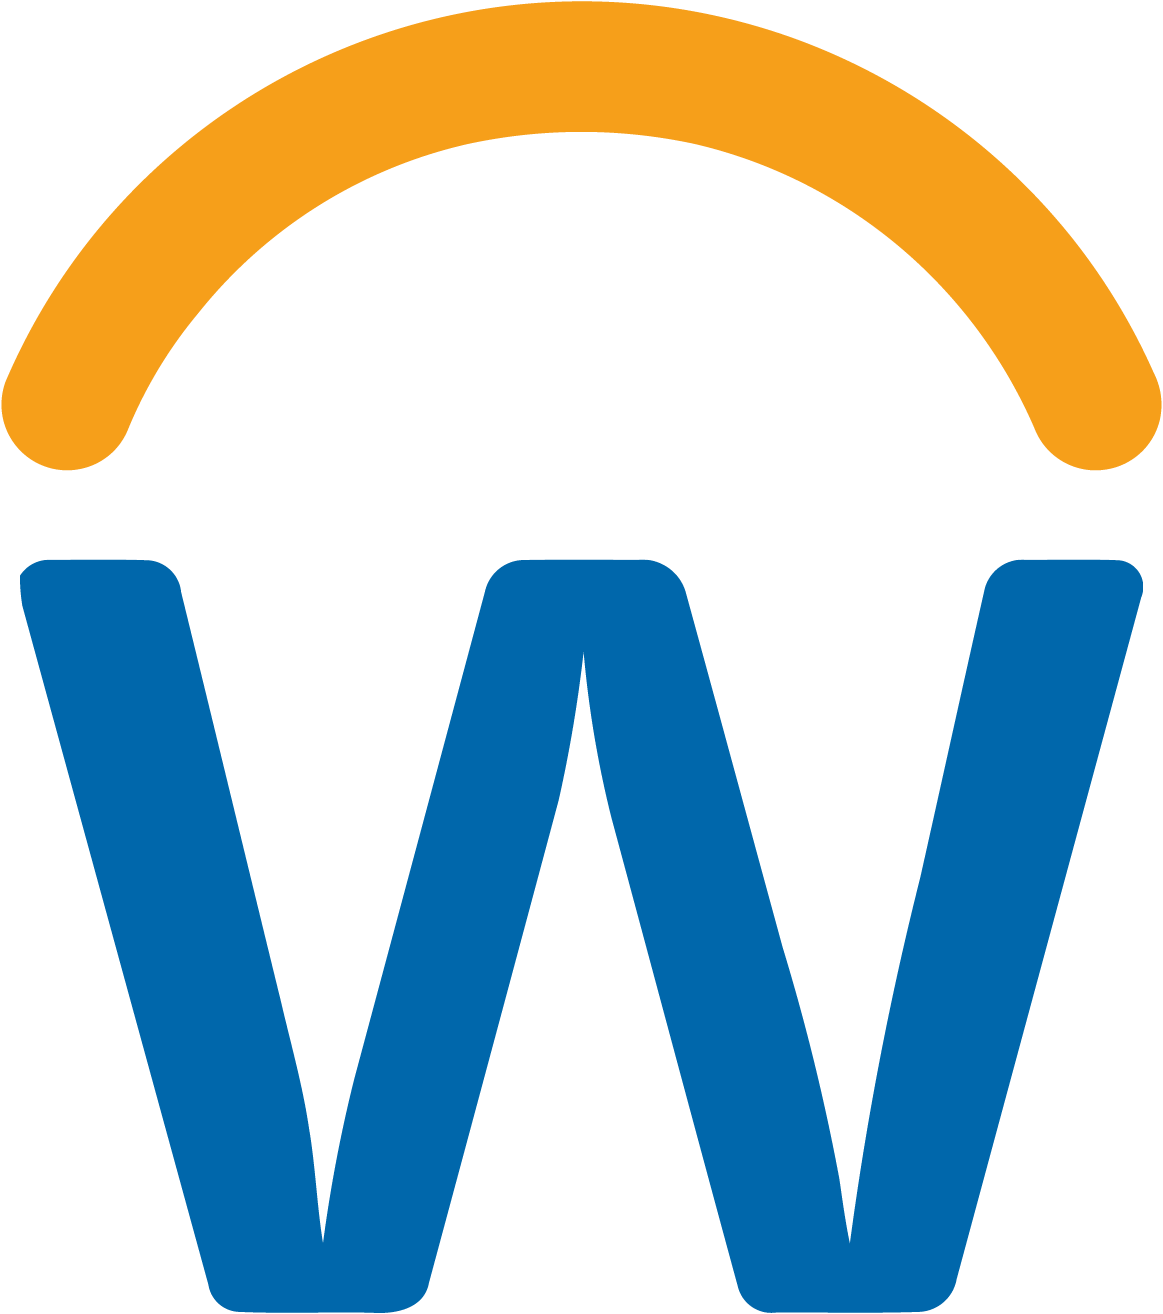 Workday Logo PNG Image